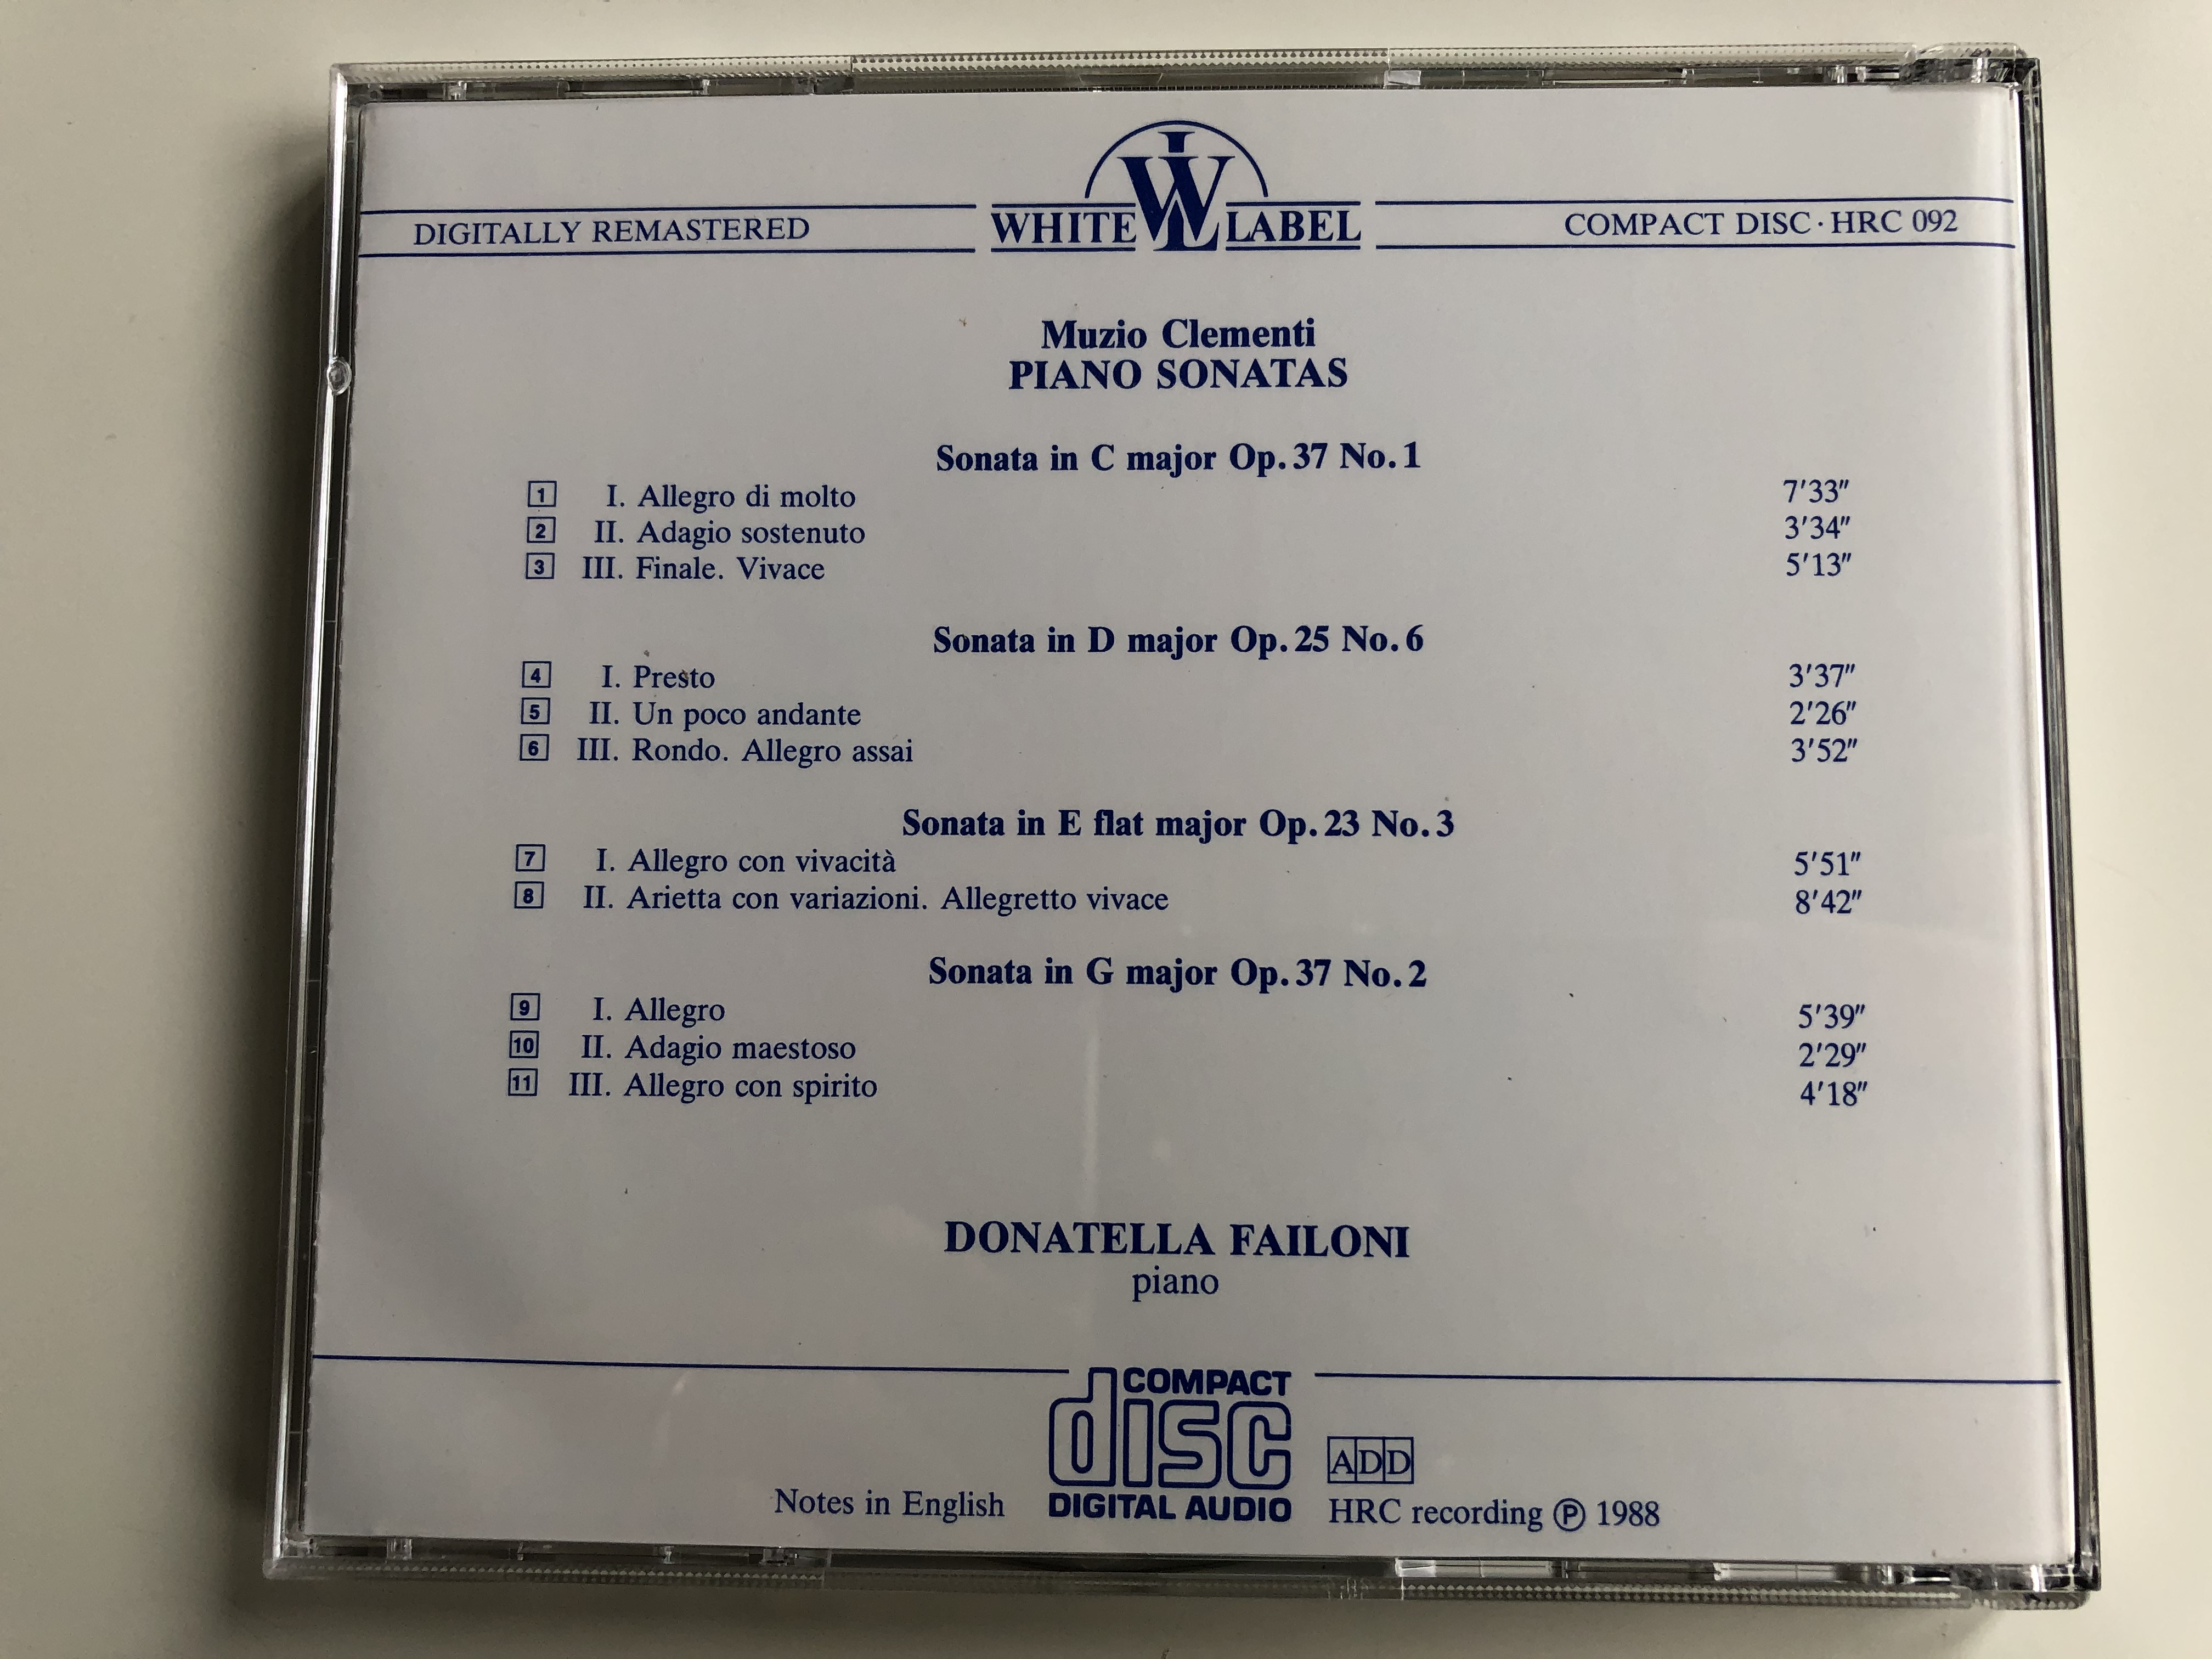 muzio-clementi-piano-sonatas-donatella-failoni-hungaroton-audio-cd-1988-stereo-hrc-092-5-.jpg